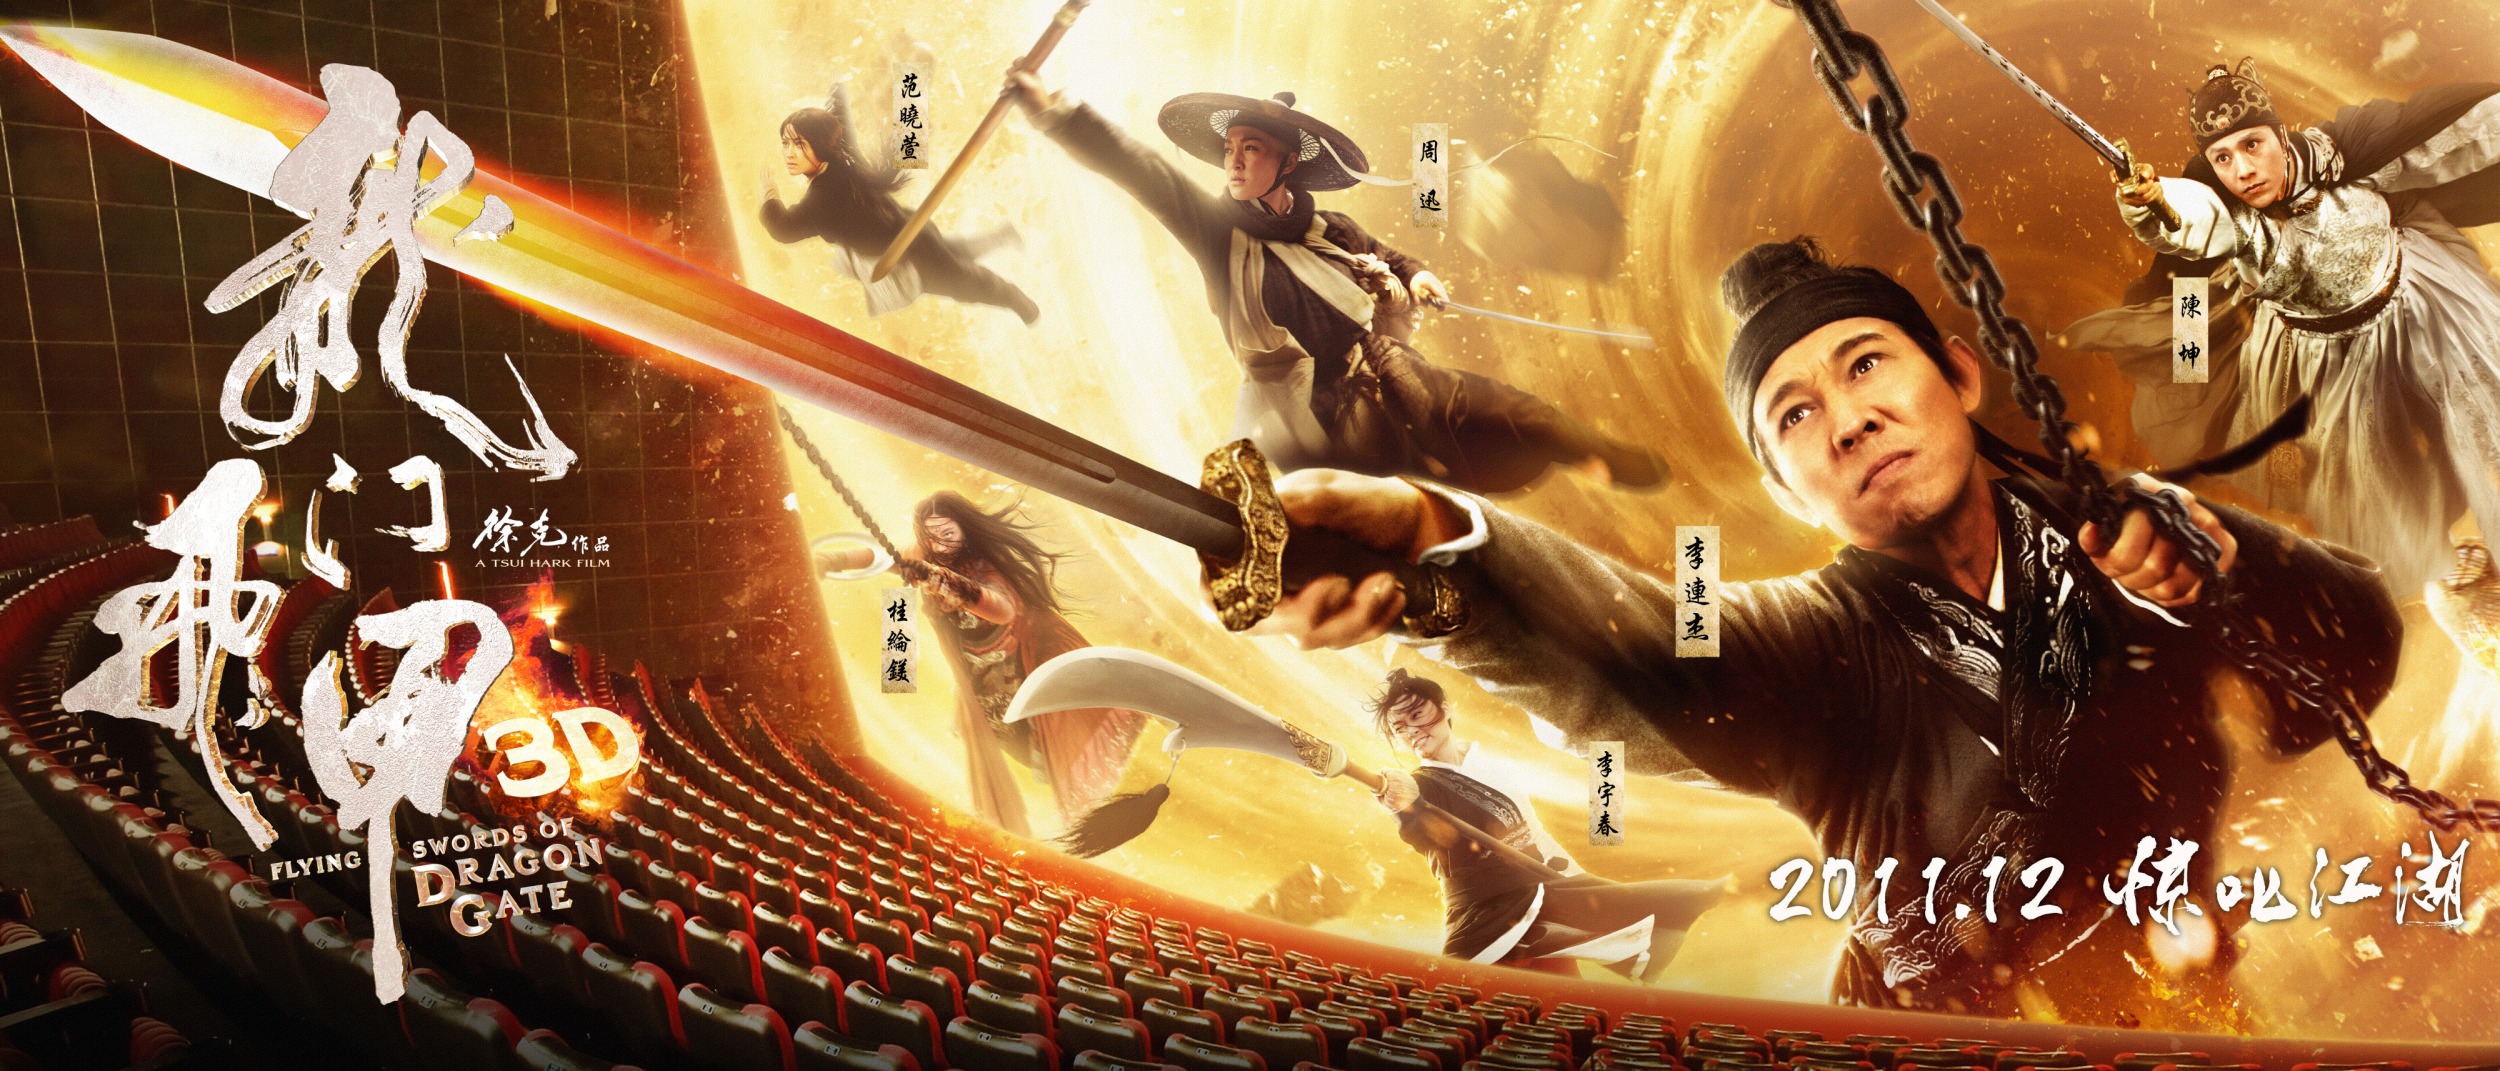 Mega Sized Movie Poster Image for Long men fei jia (#8 of 8)